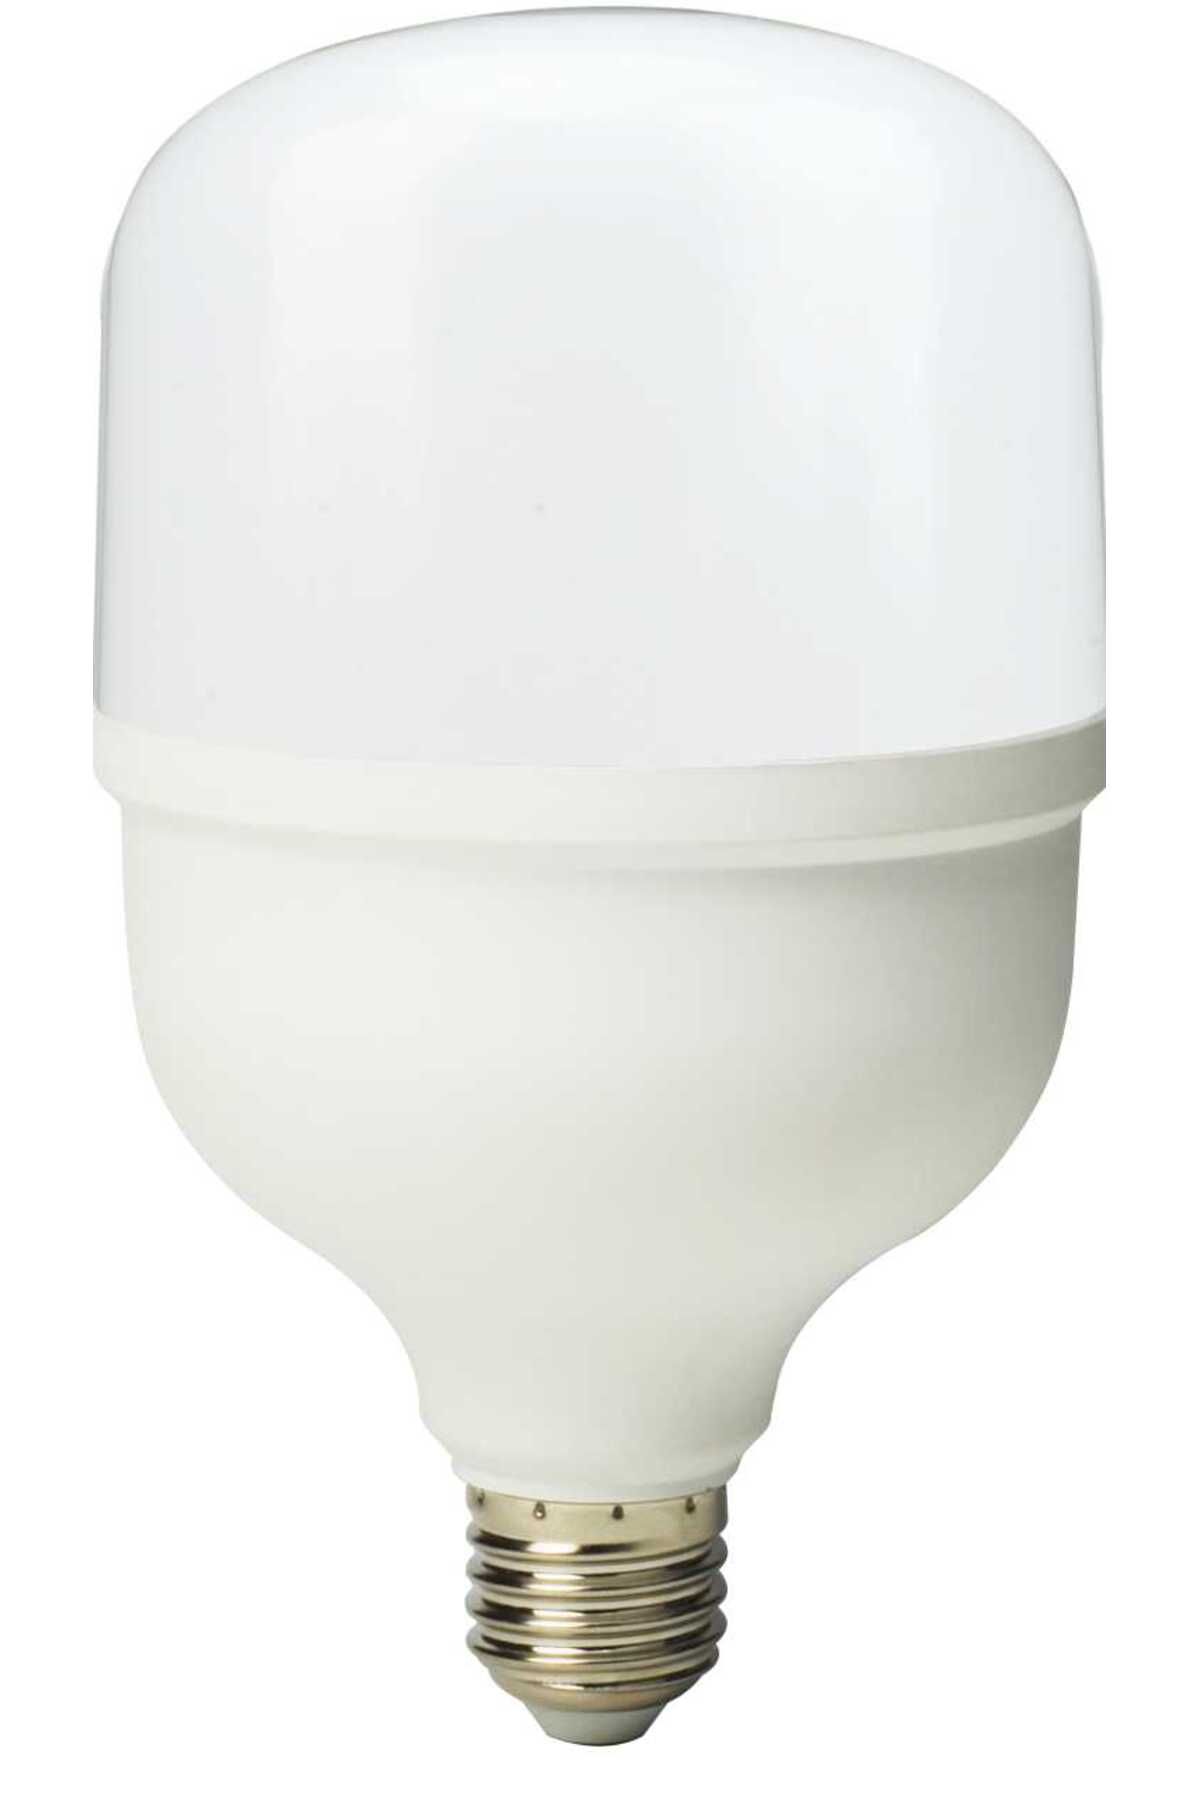 Novo 20W Torch LED Ampul (Beyaz Işık) - 1 Adet